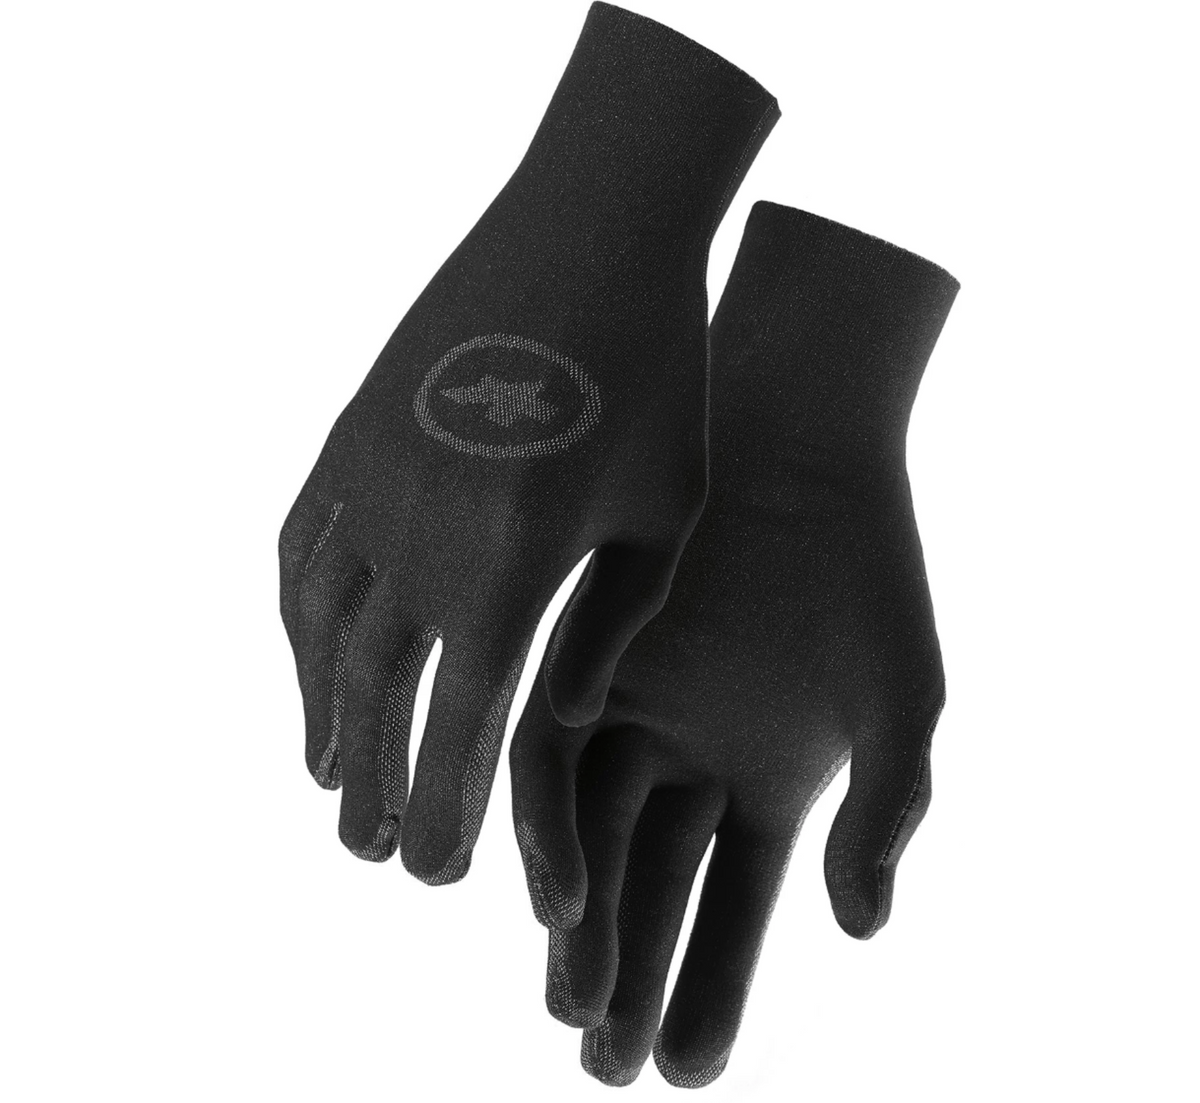 Assos Assosories Spring/Fall Liner Gloves